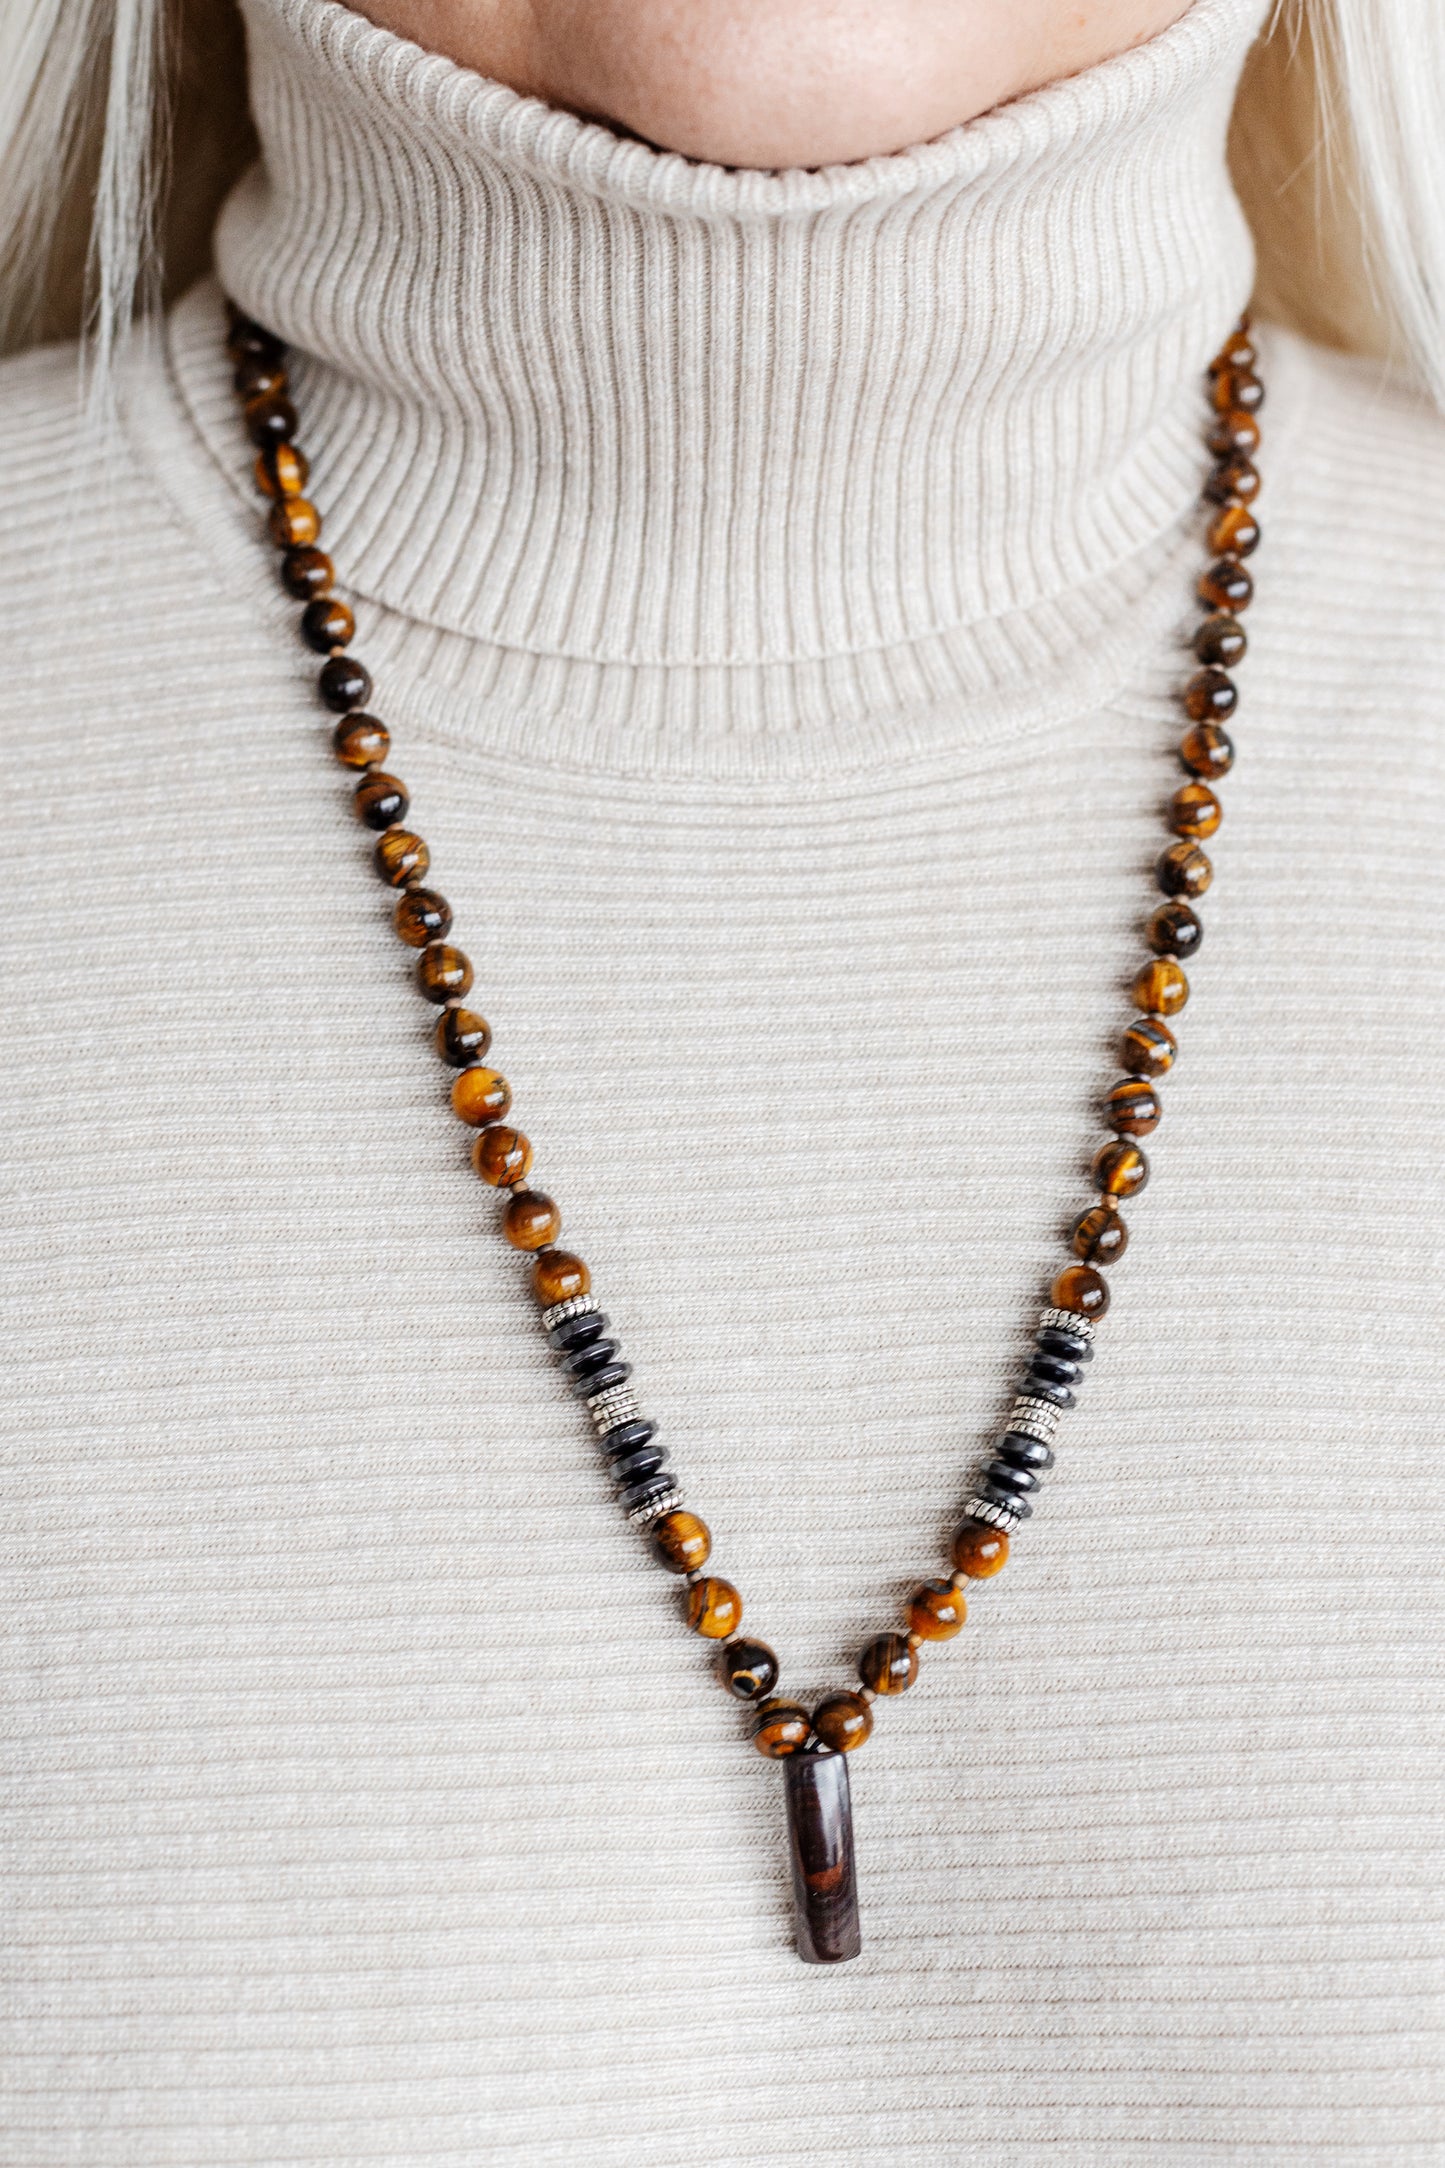 Handmade Tiger Eyes Stone Beads 8mm Unisex Necklace